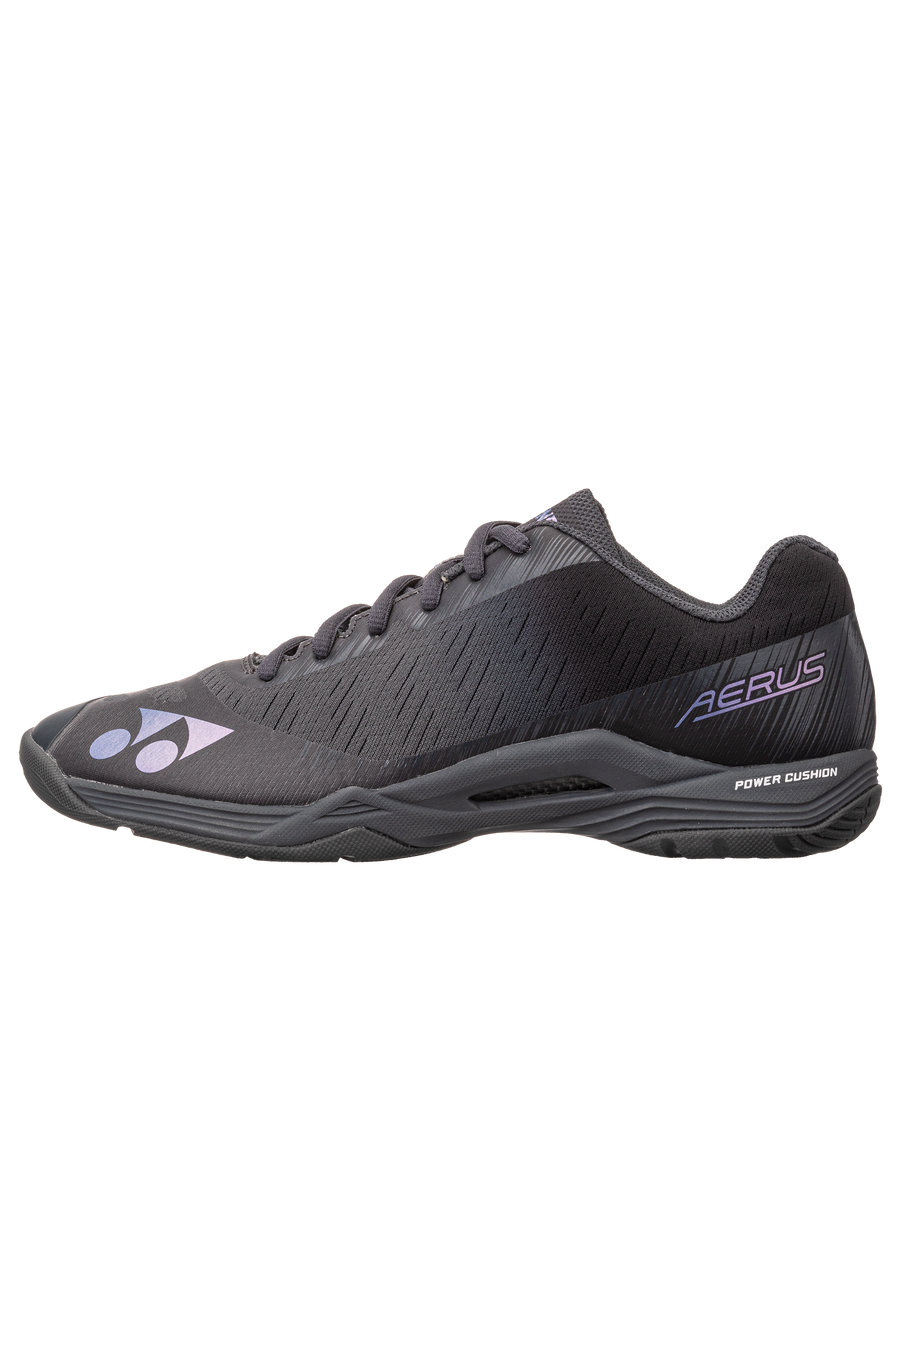 2022 Yonex Power Cushion SHB Aerus Z Men's Badminton Shoes (Dark Gray)